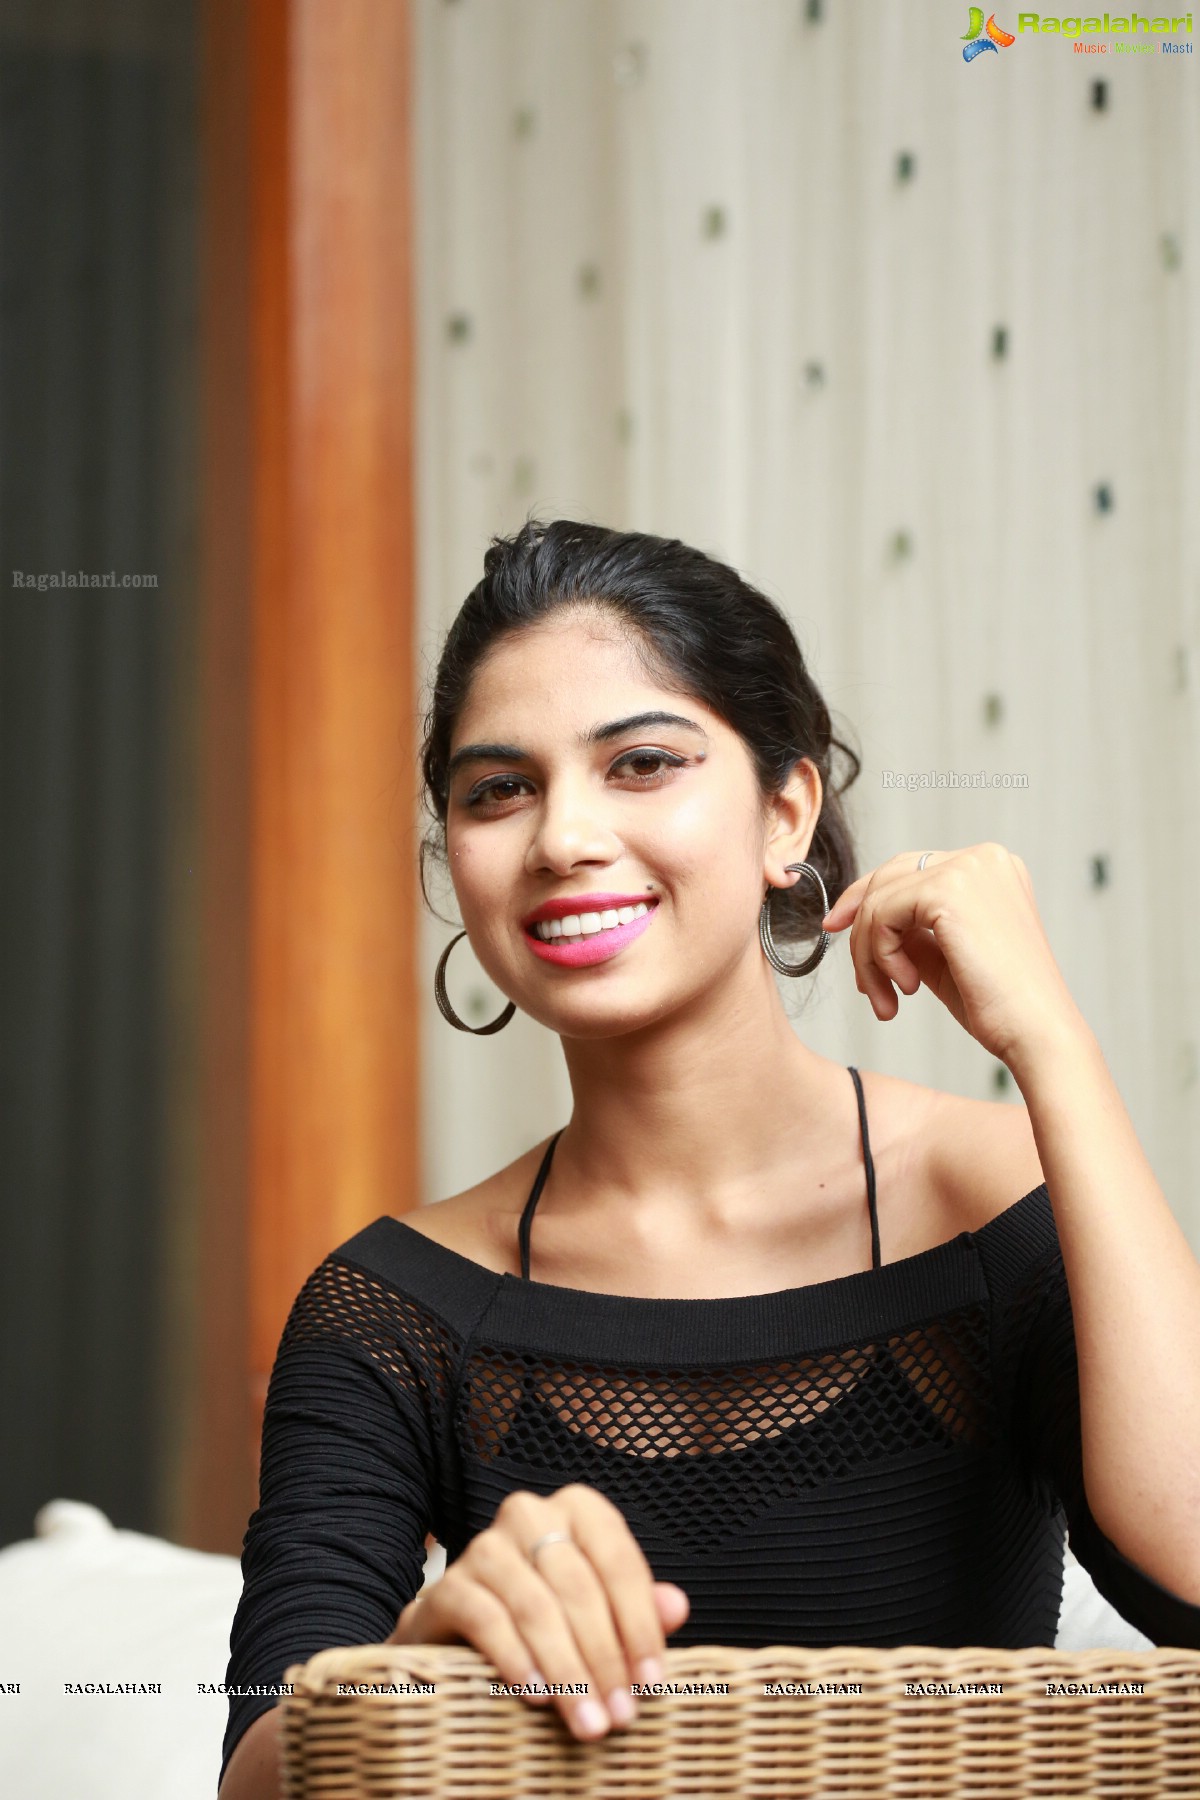 Indian Princess - A Unique Beauty Pageant Season 7 Bangalore Audition at Hotel Hyatt